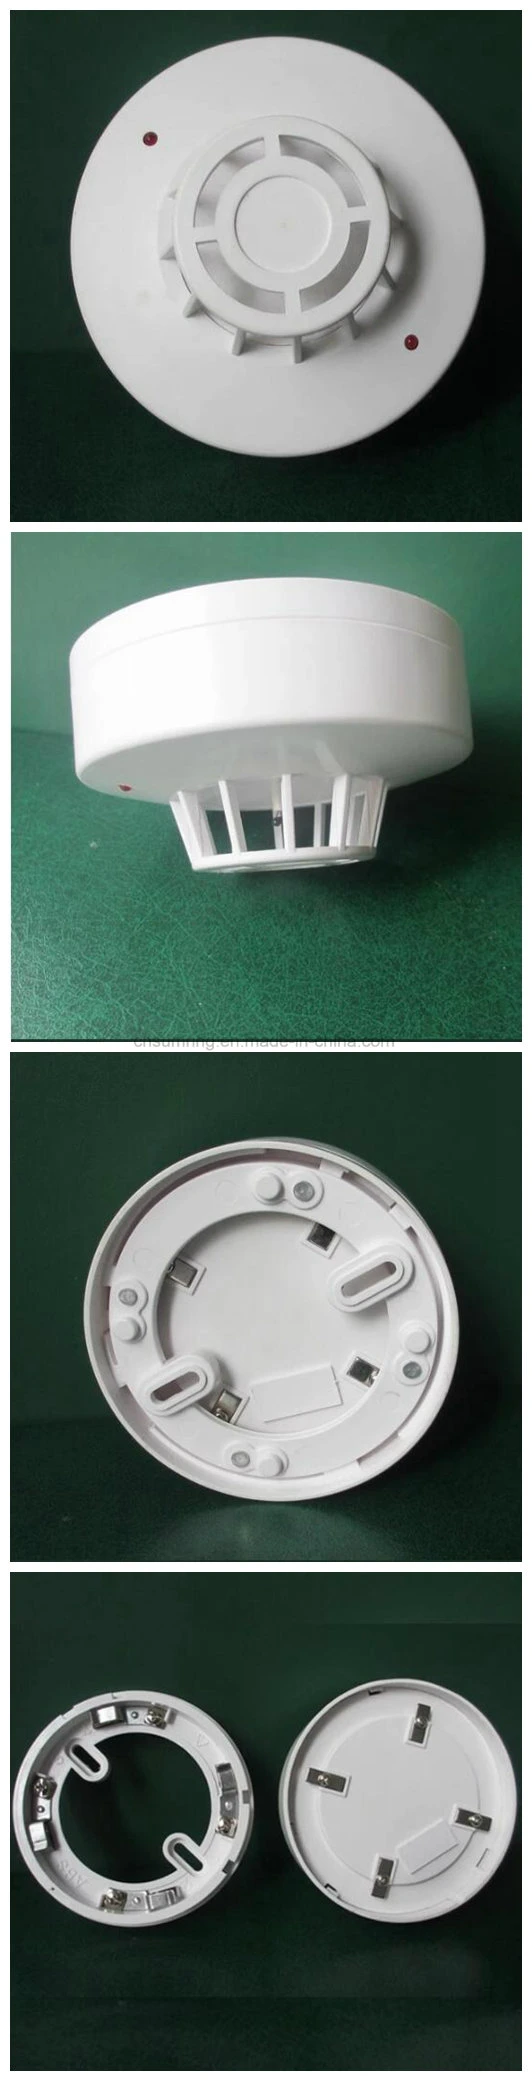 Temperature Sensor Plastic Enclosure with Small Heating Chamber